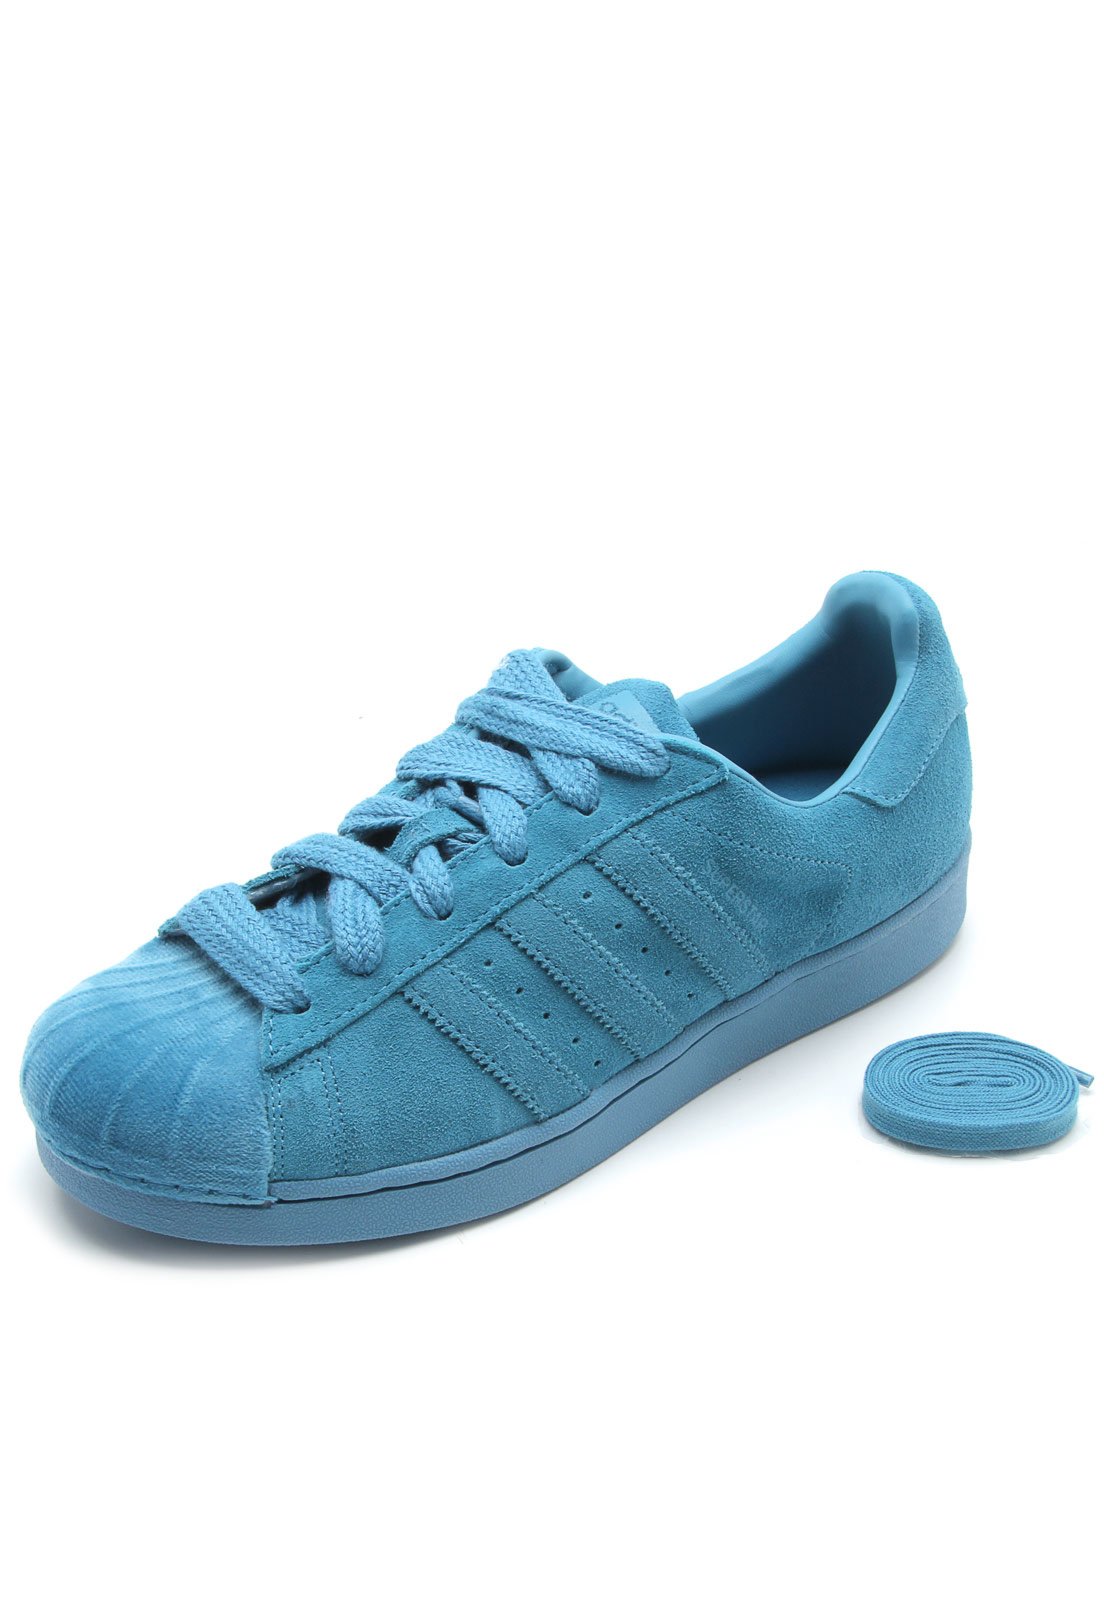 tenis adidas originals azul